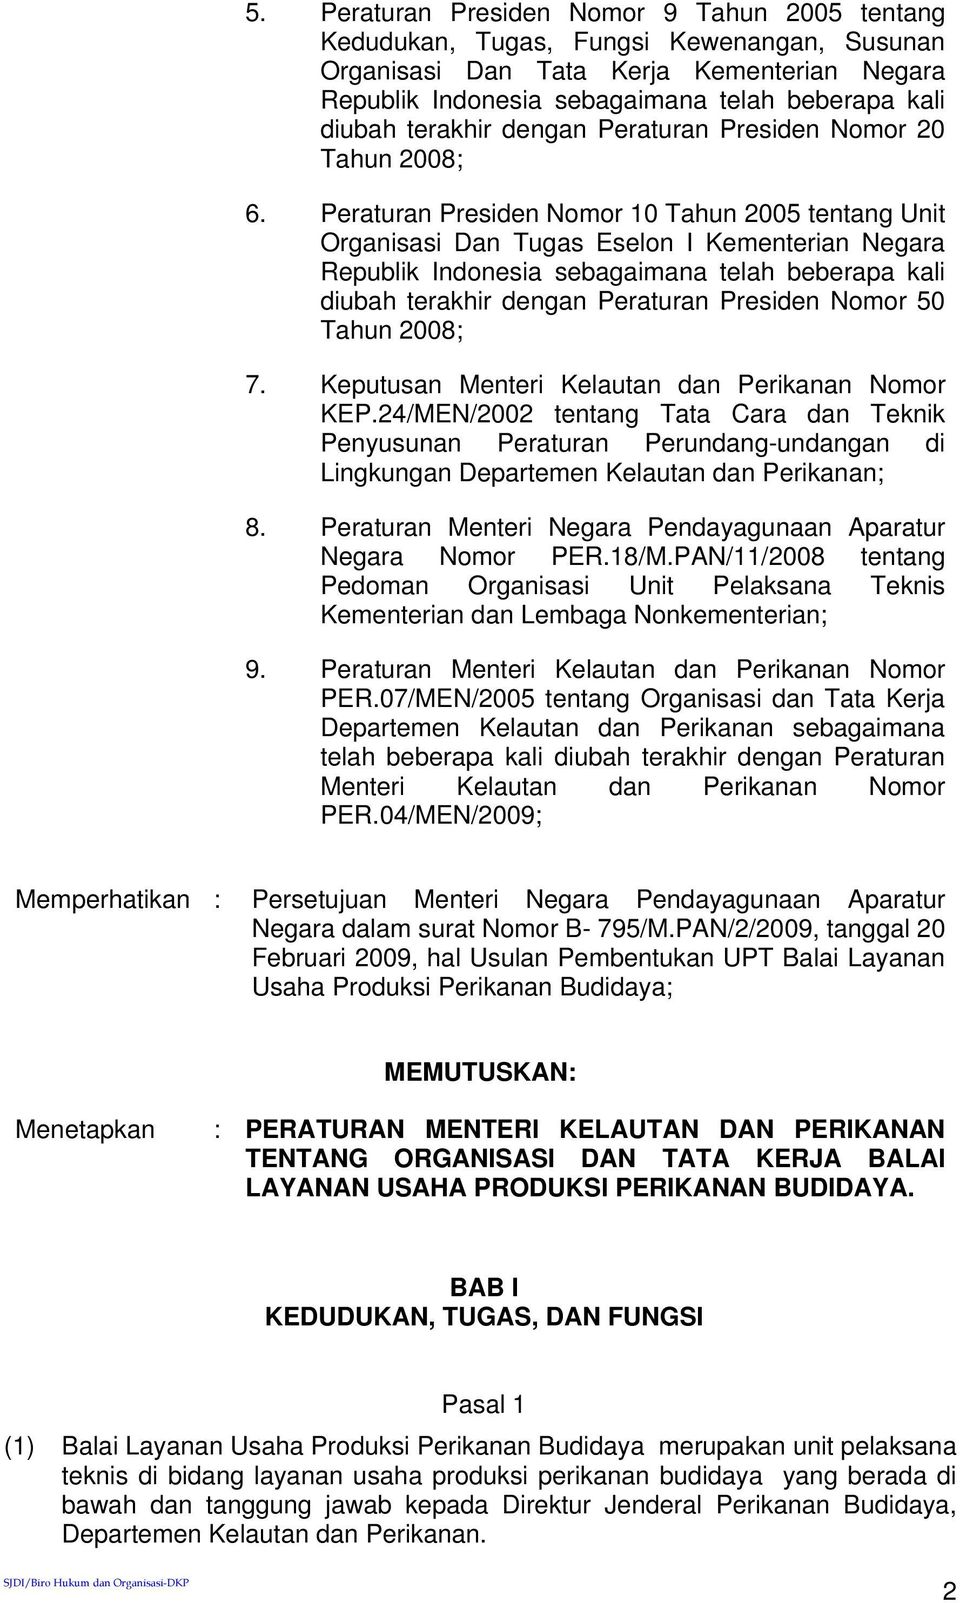 Peraturan Presiden Nomor 10 Tahun 2005 tentang Unit Organisasi Dan Tugas Eselon I Kementerian Negara Republik Indonesia sebagaimana telah beberapa kali diubah terakhir dengan Peraturan Presiden Nomor